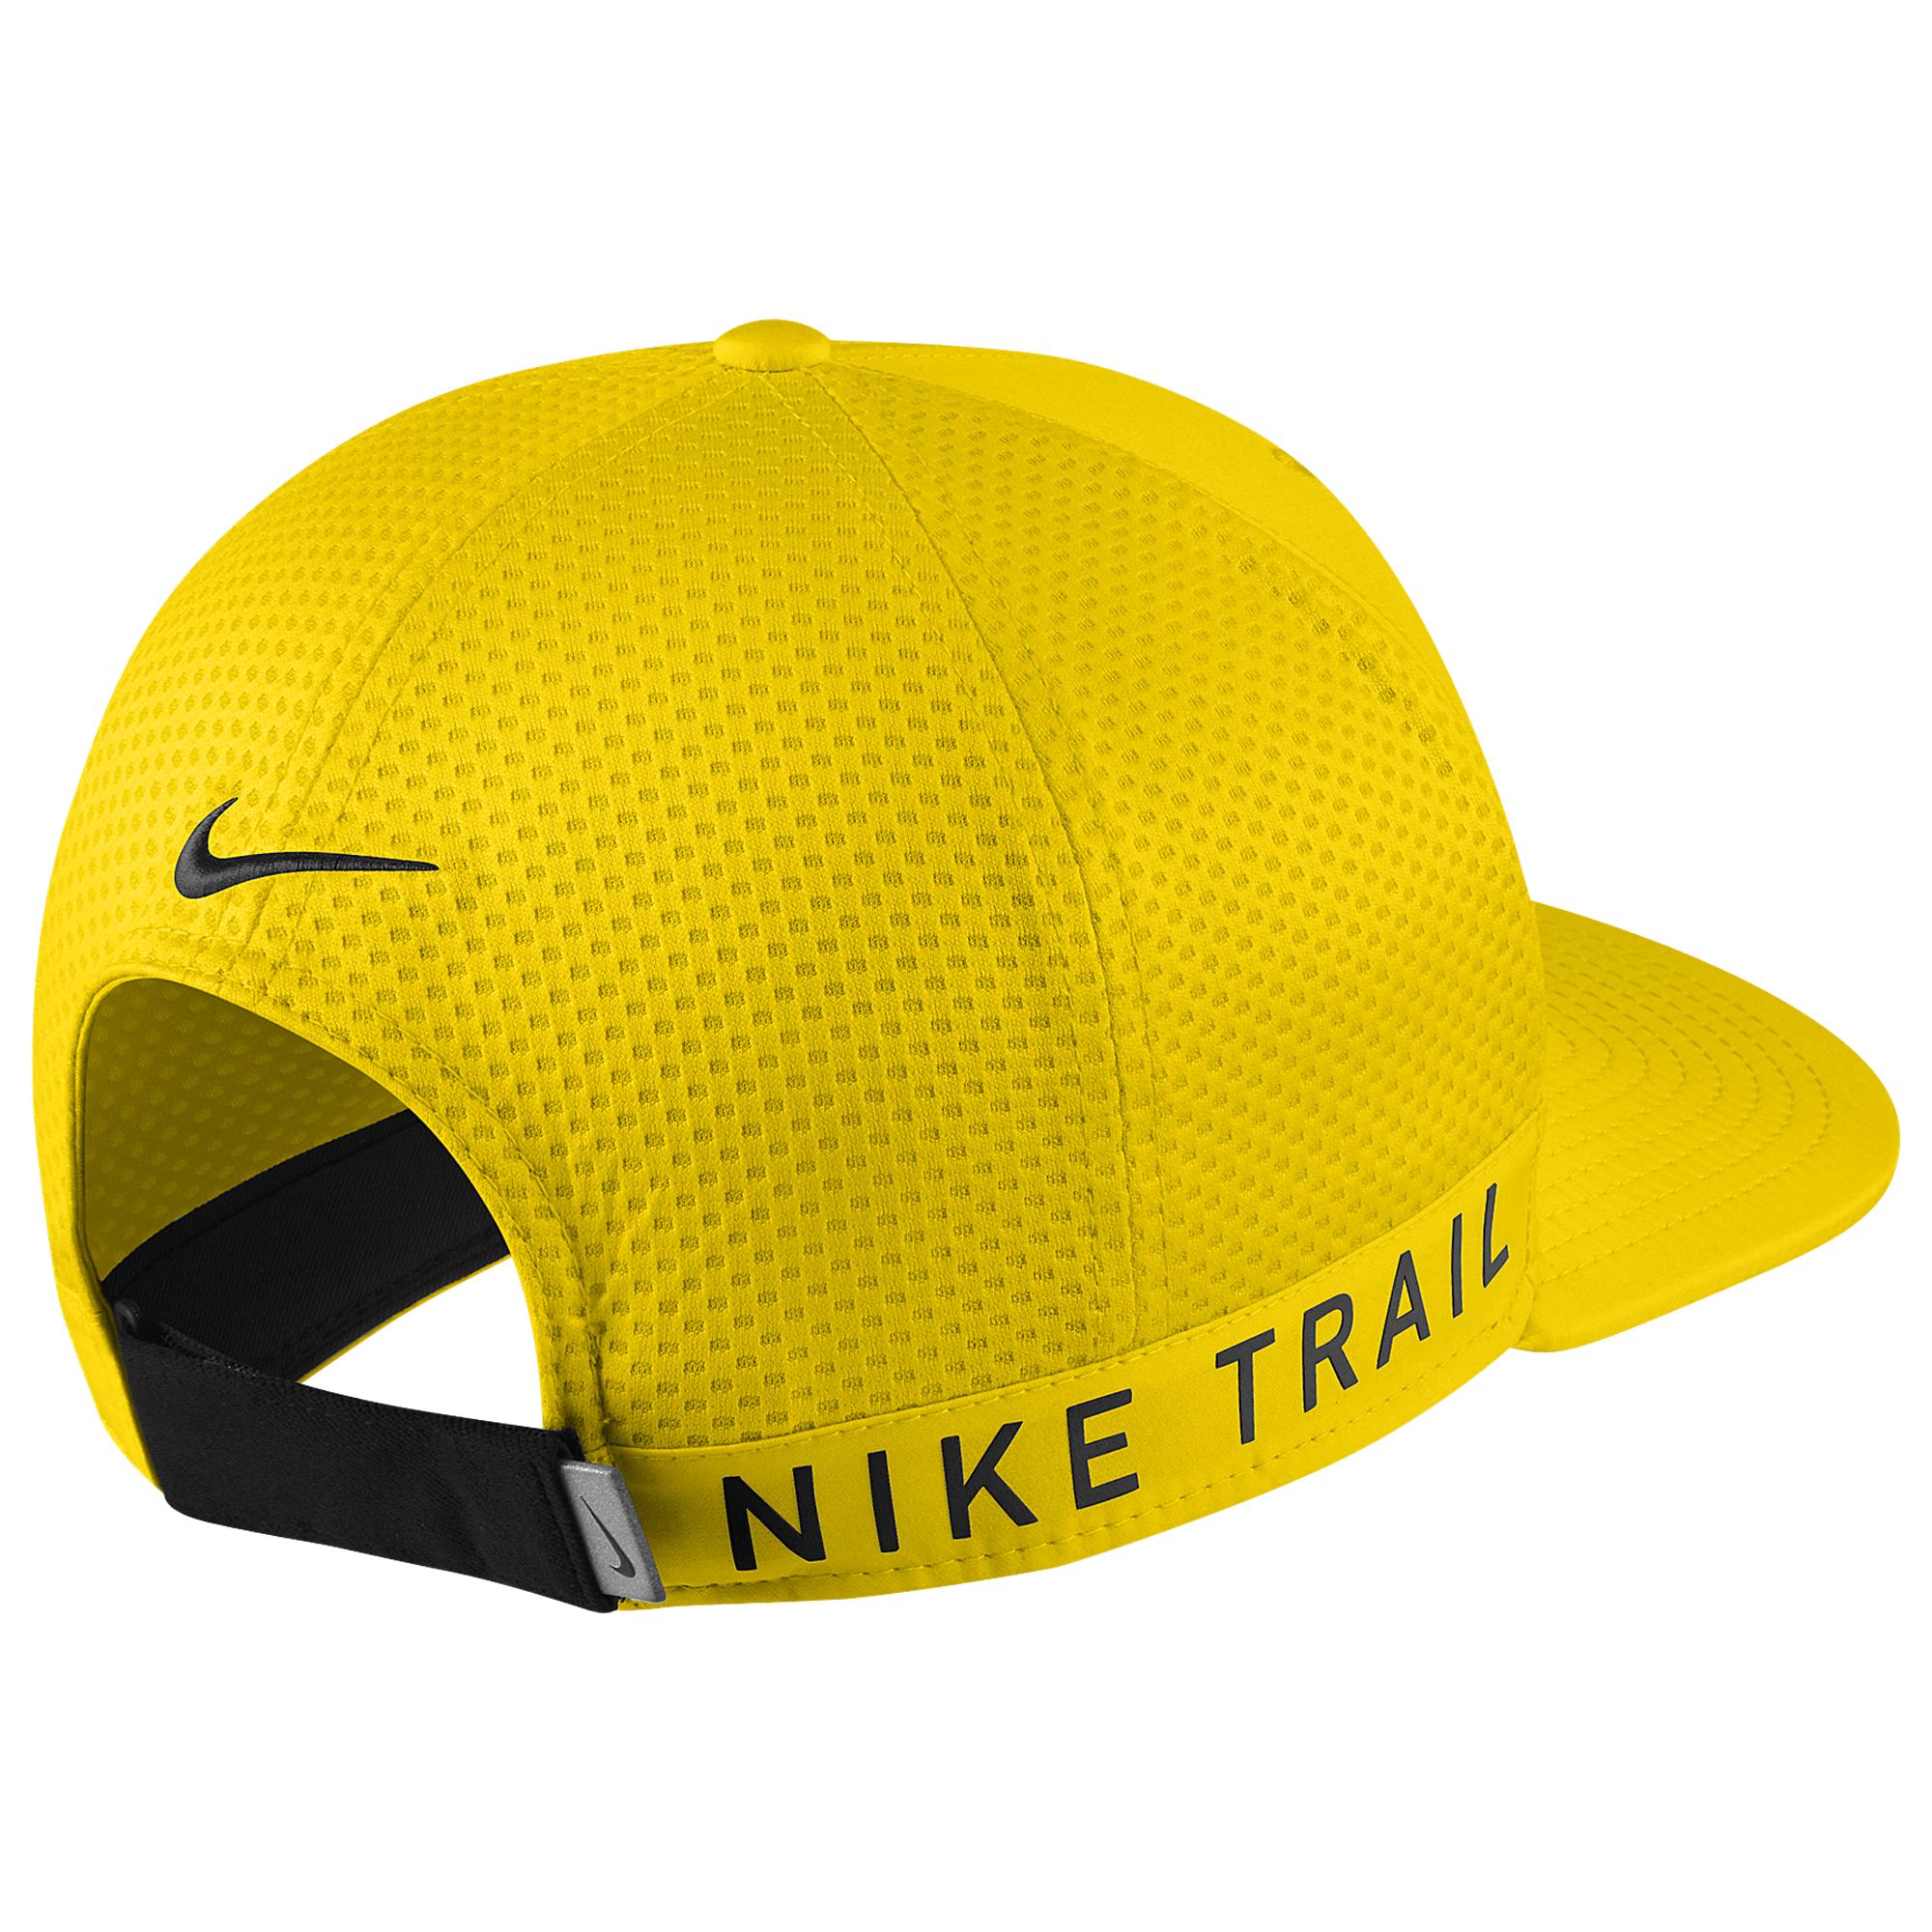 nike trail cap yellow